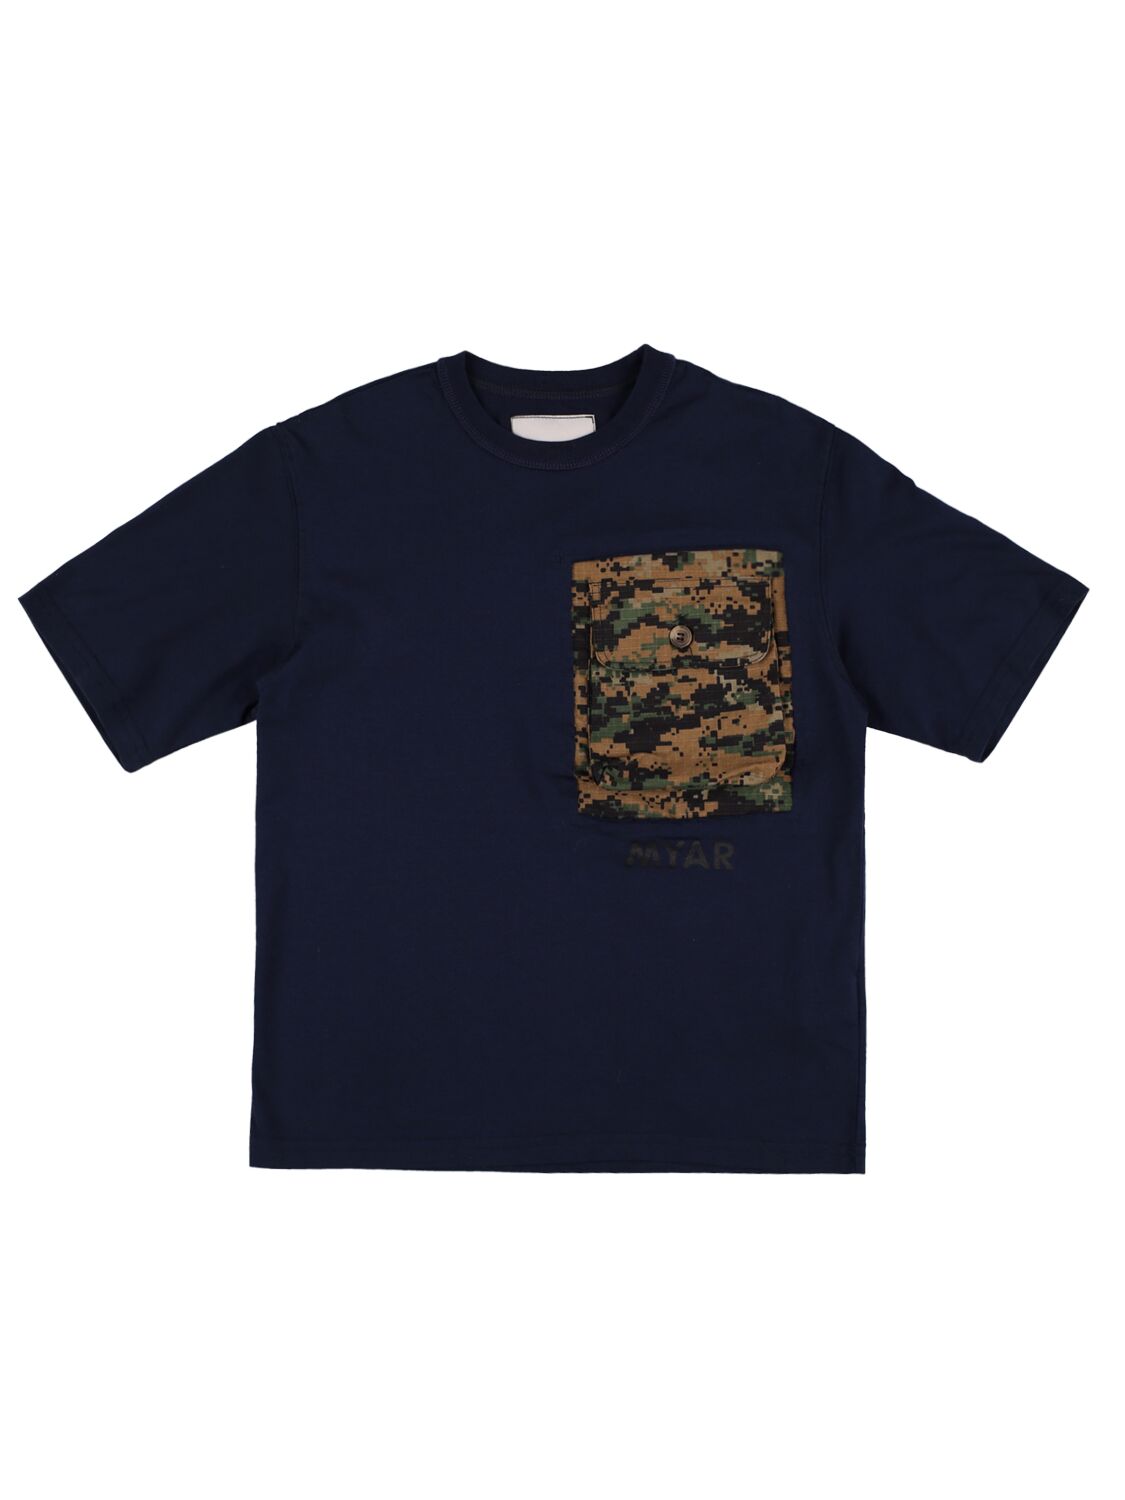 Myar Kids' Printed Cotton Jersey T-shirt In Navy